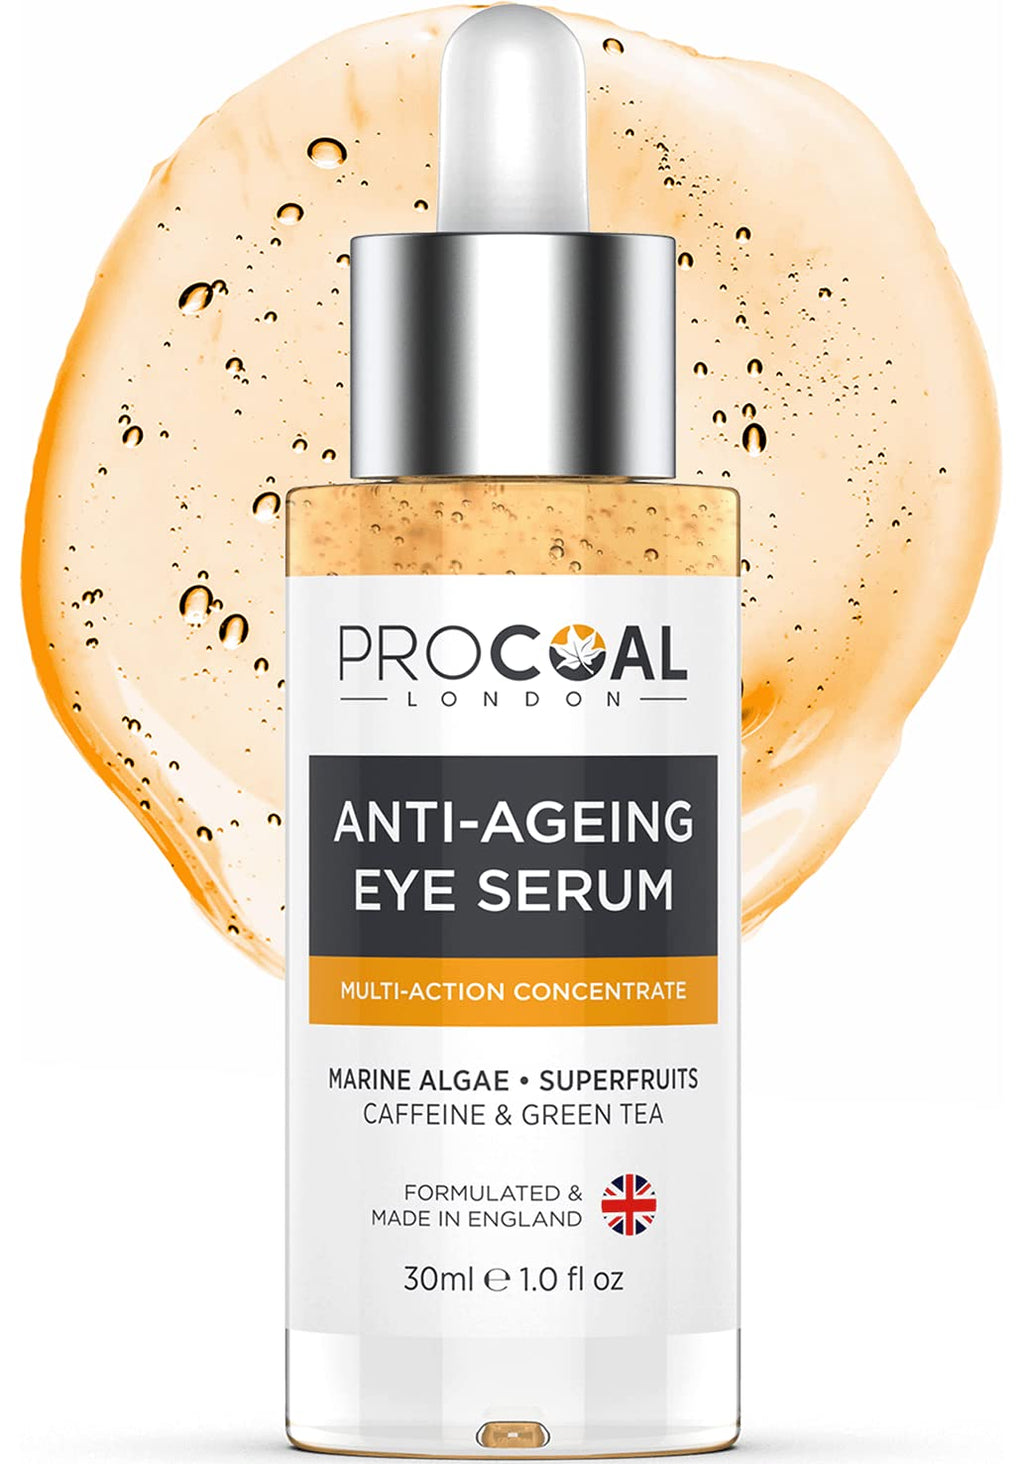 [Australia] - NEW Anti-ageing Eye Serum 30ml by Procoal - Eye Cream Anti Aging, Puffiness, Under Eye Circles & Wrinkles with Marine Algae, Caffeine & Green Tea, Vegan, Made in UK 